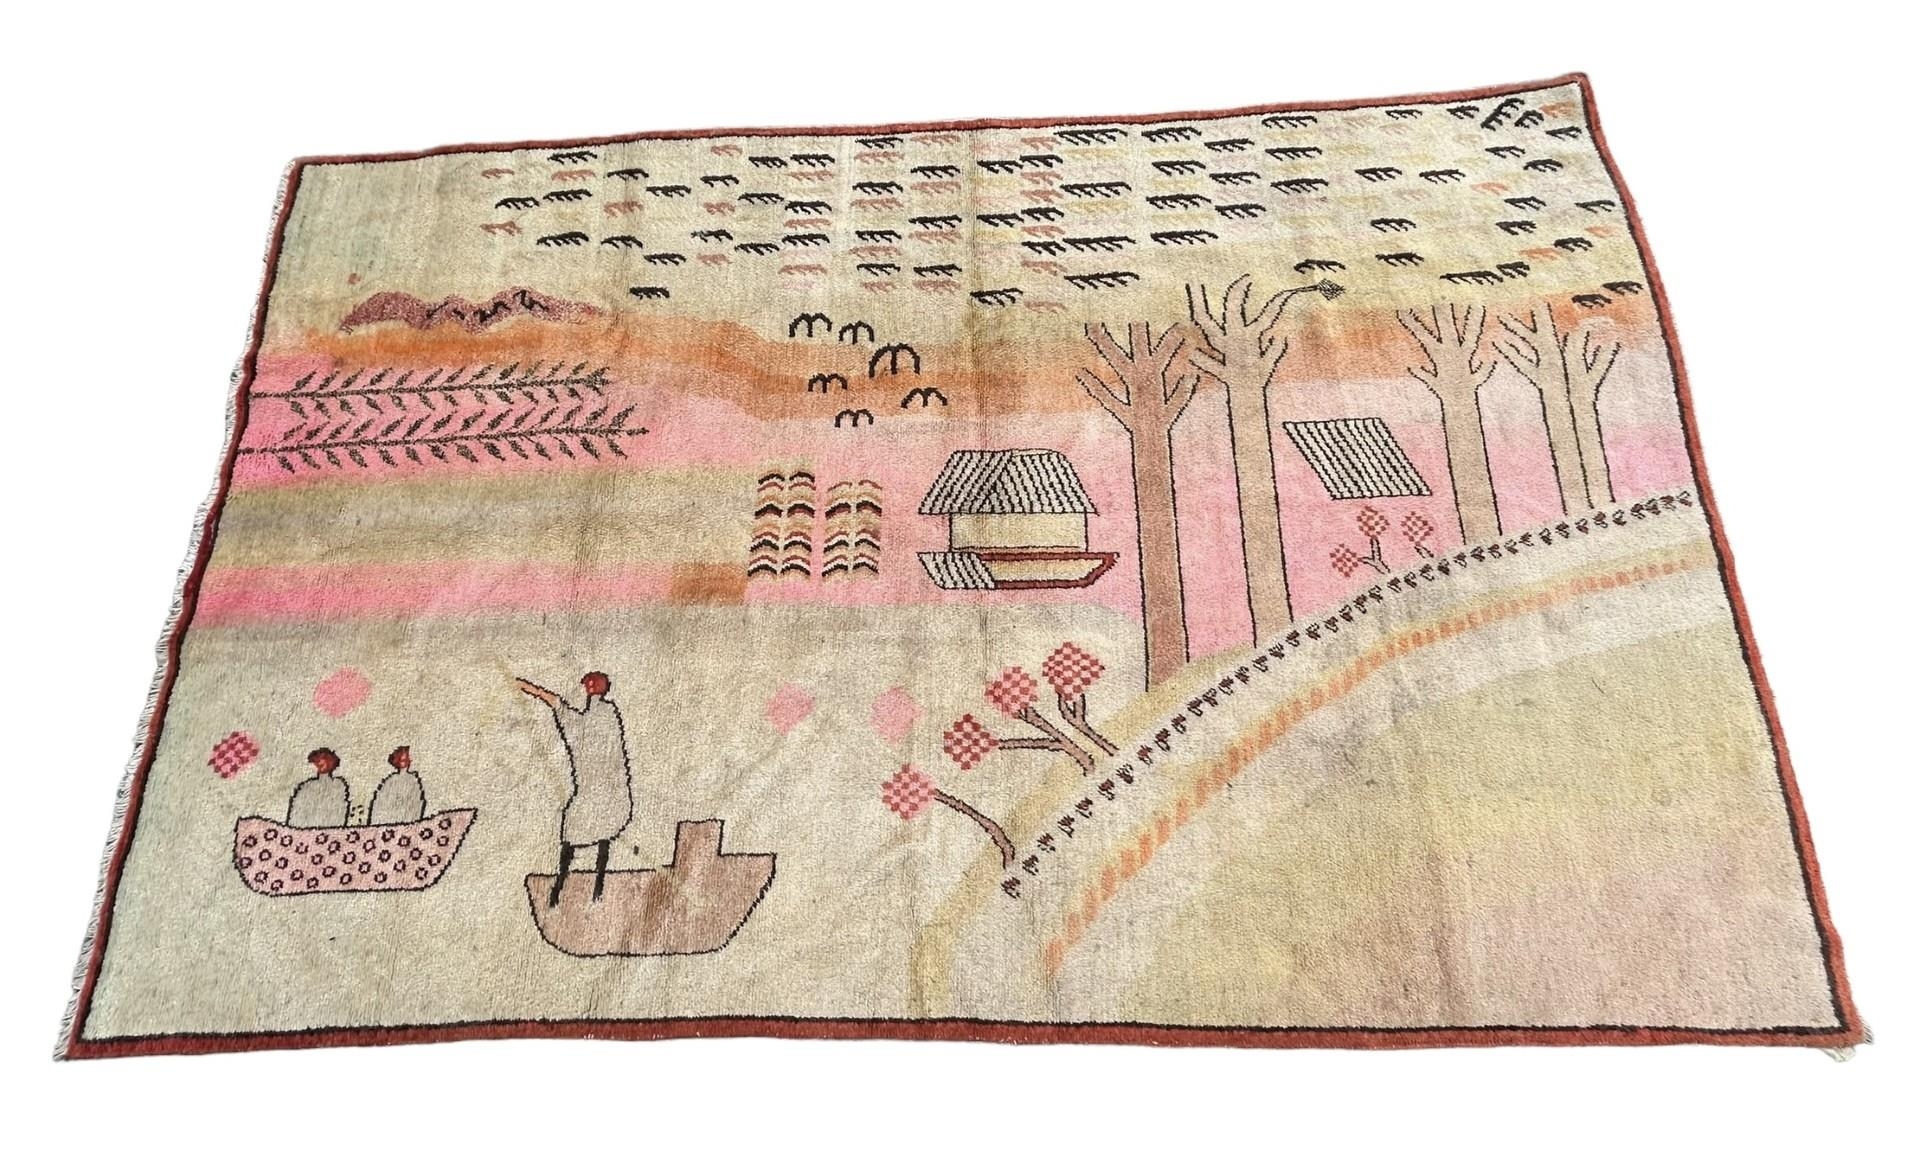 SAMARKAND, CIRCA 1880, WOOL PILE, COTTON FOUNDATION CARPET/RUG. (260 x 167cm)